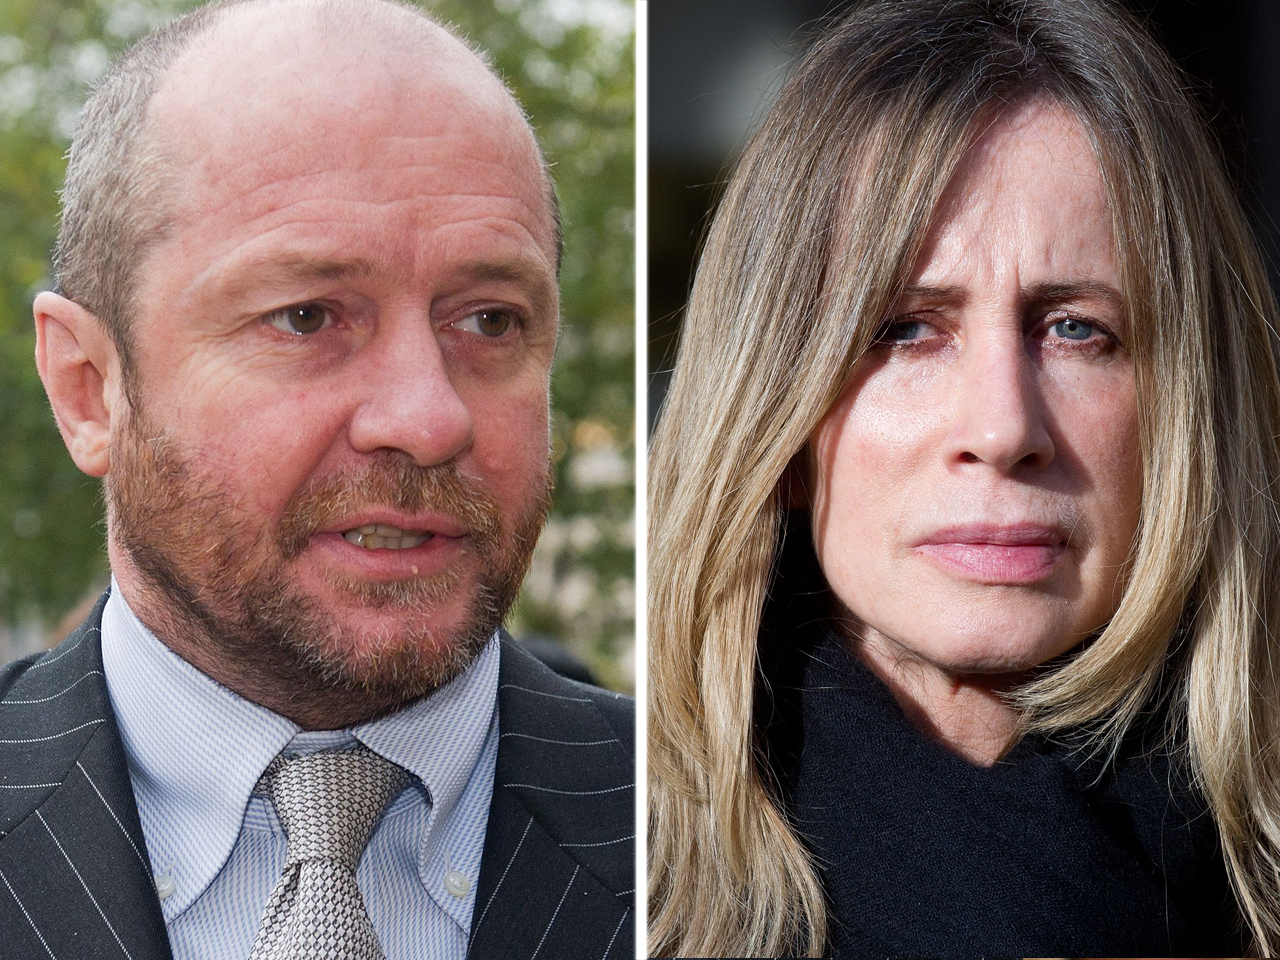 'Penniless' man is worth $65 million, judge rules in British divorce case